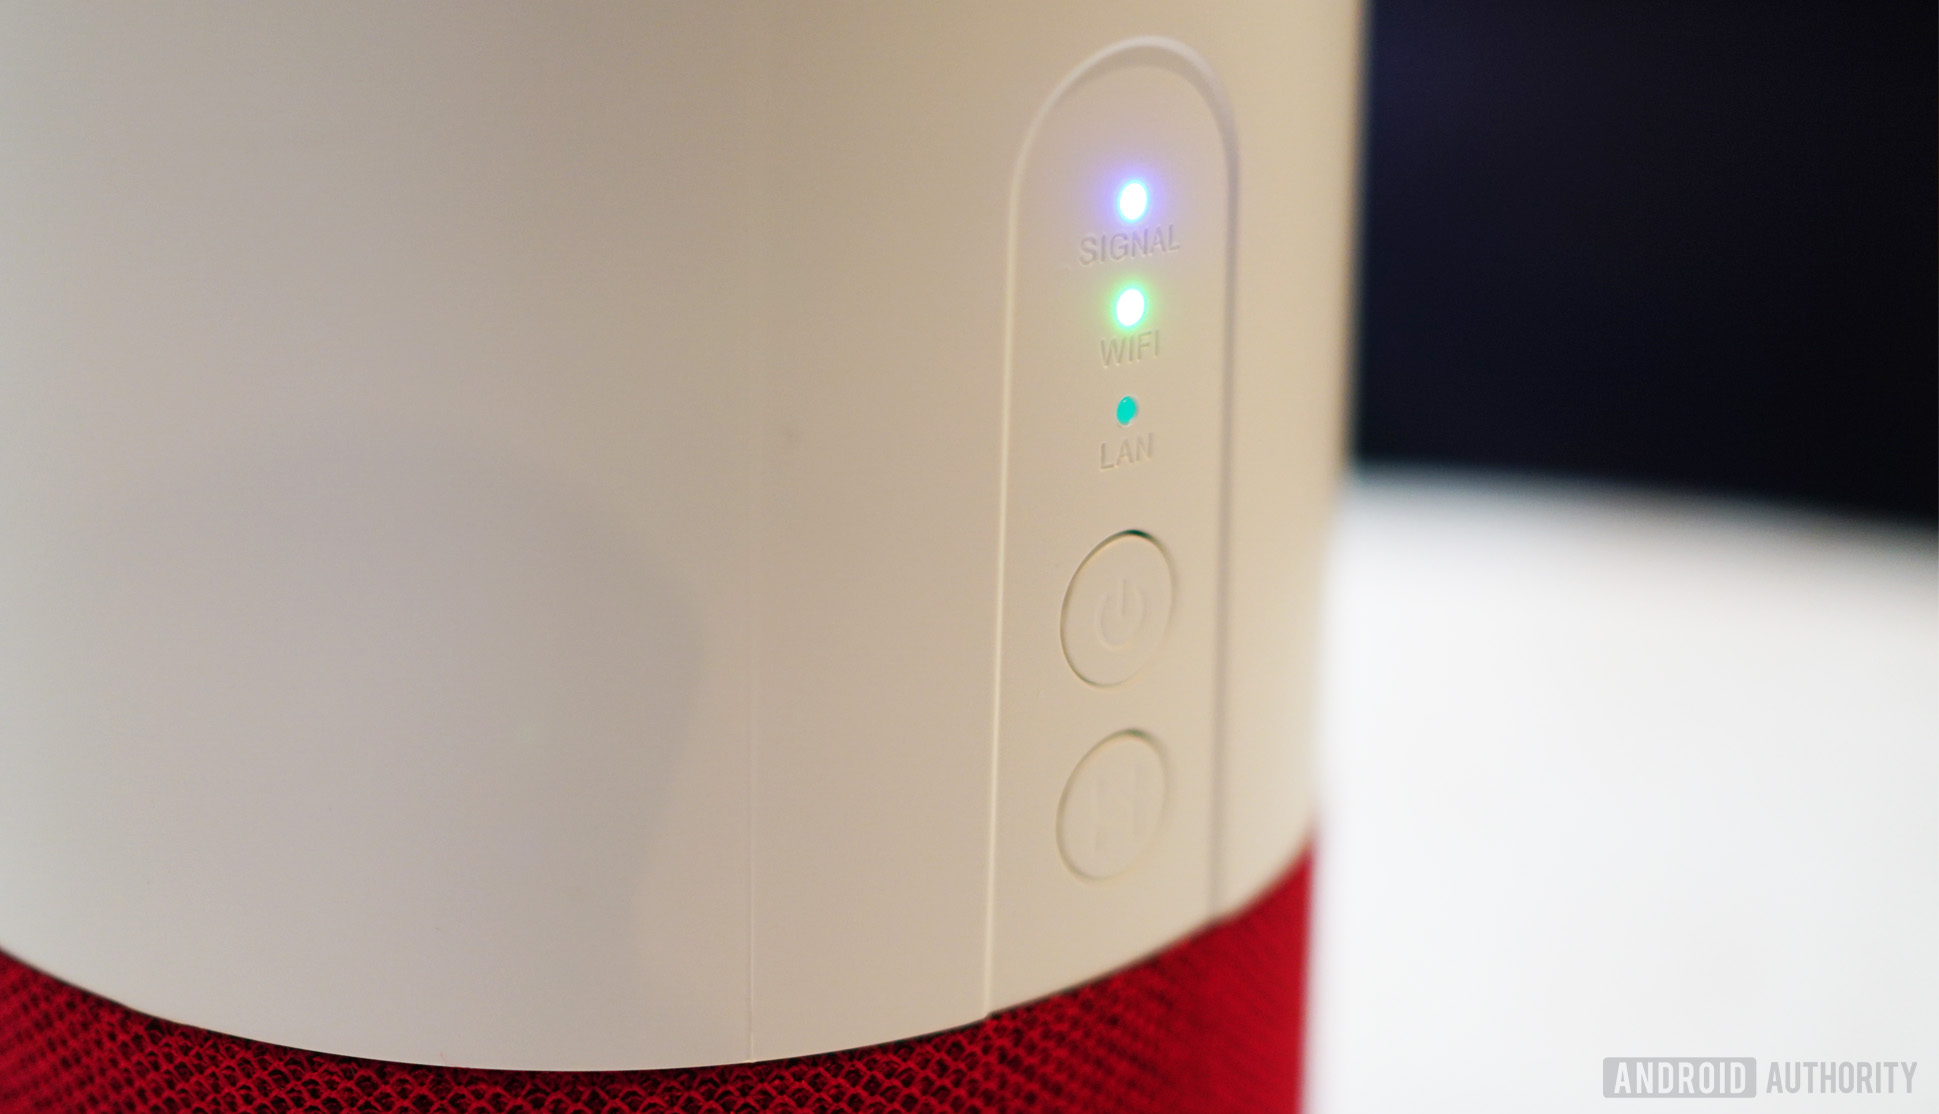 AI isn't just an Alexa smart speaker, it's a 4G LTE router too